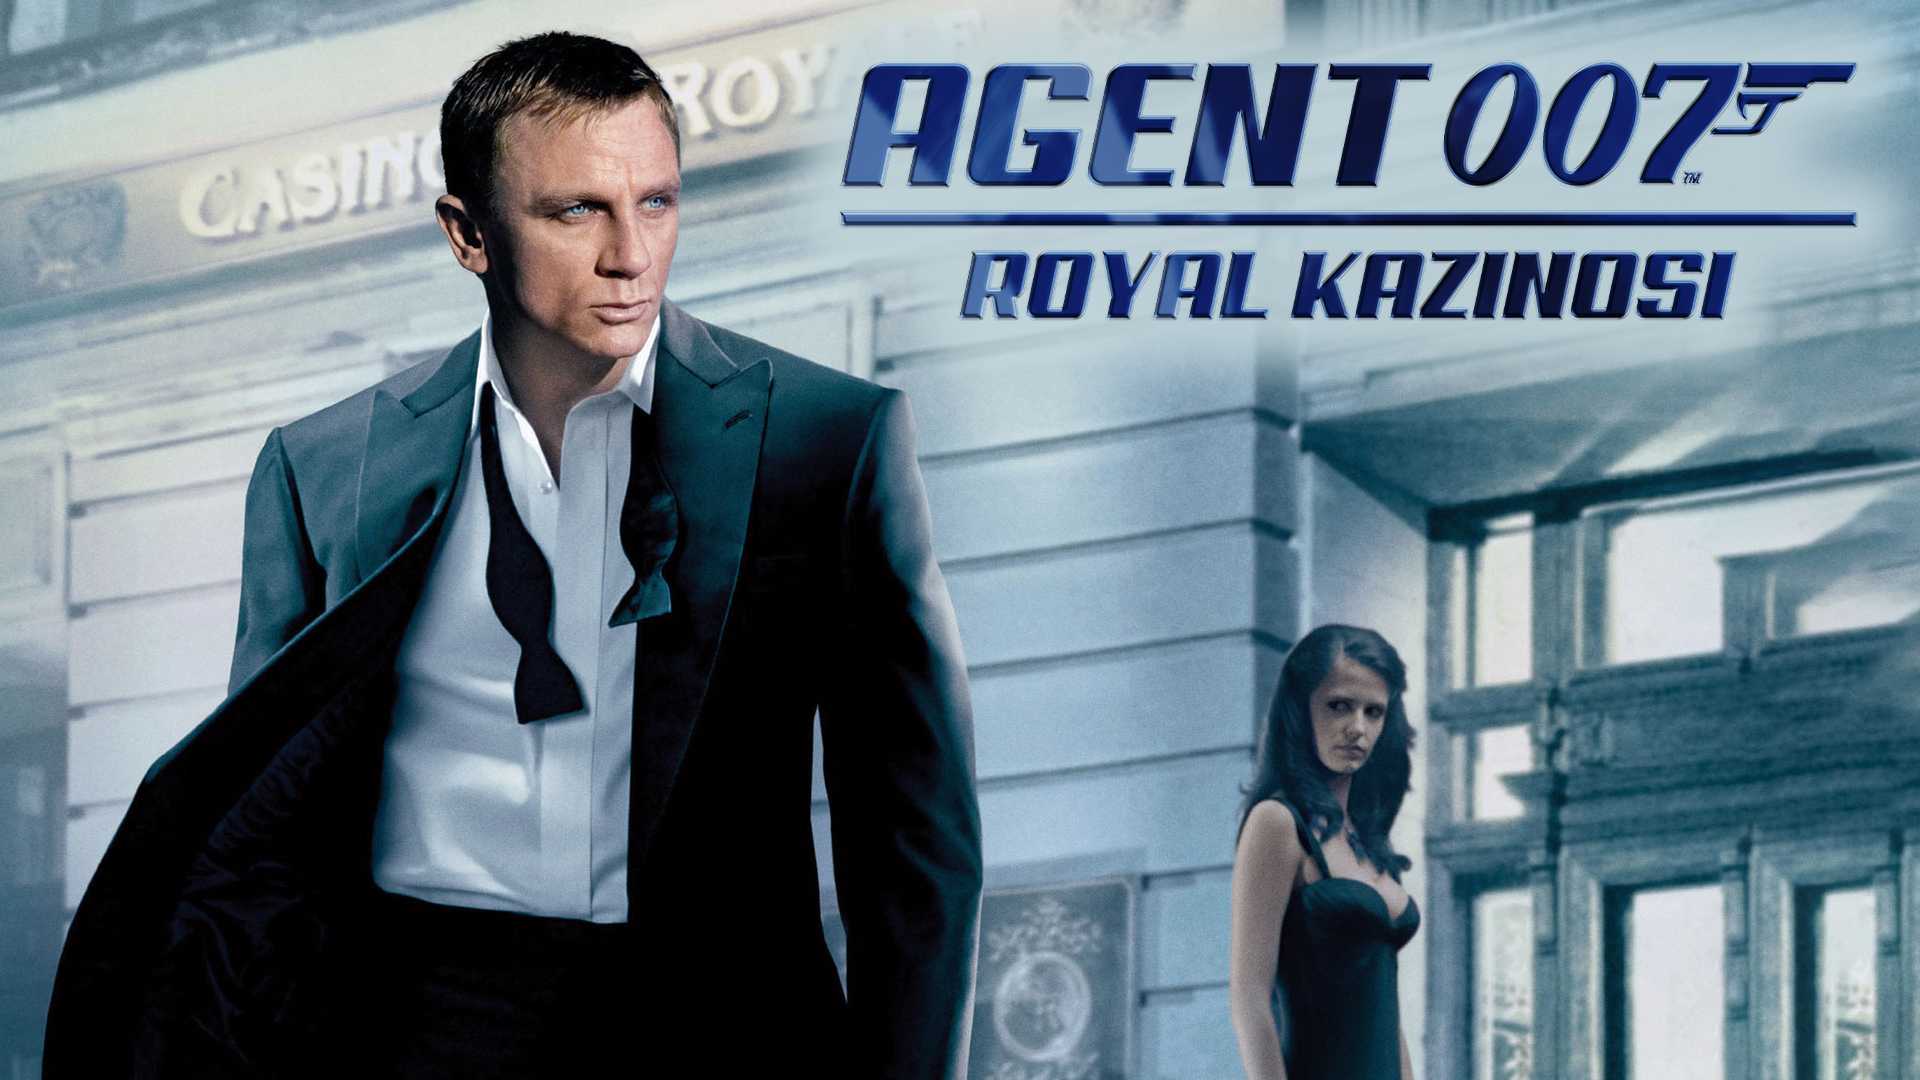 Agent 007: Royal kazinosi